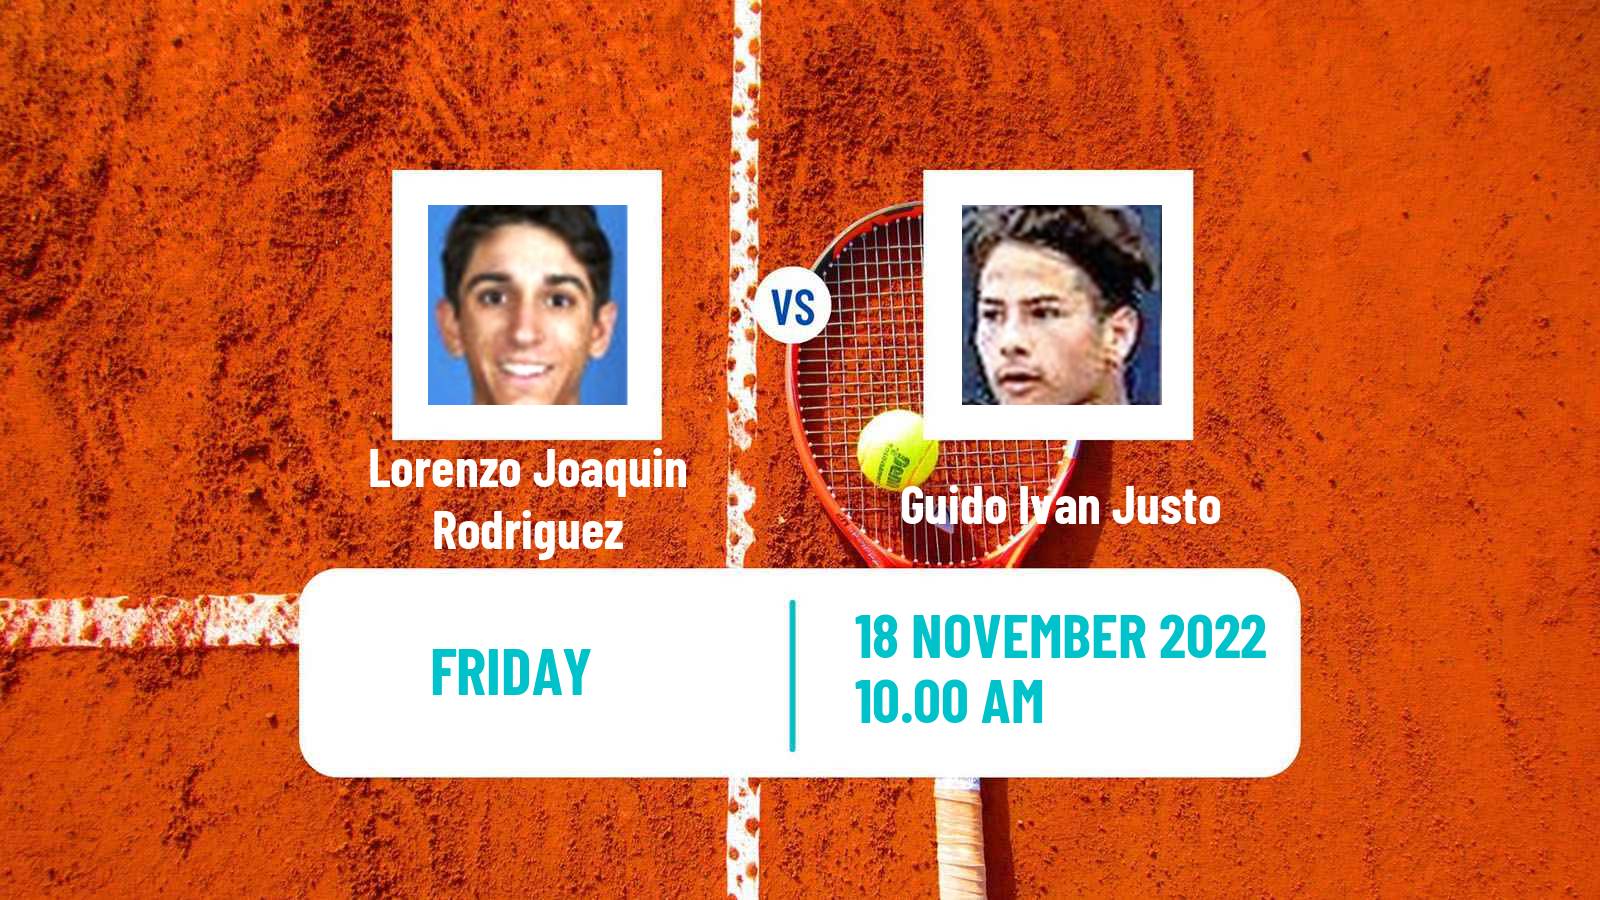 Tennis ITF Tournaments Lorenzo Joaquin Rodriguez - Guido Ivan Justo